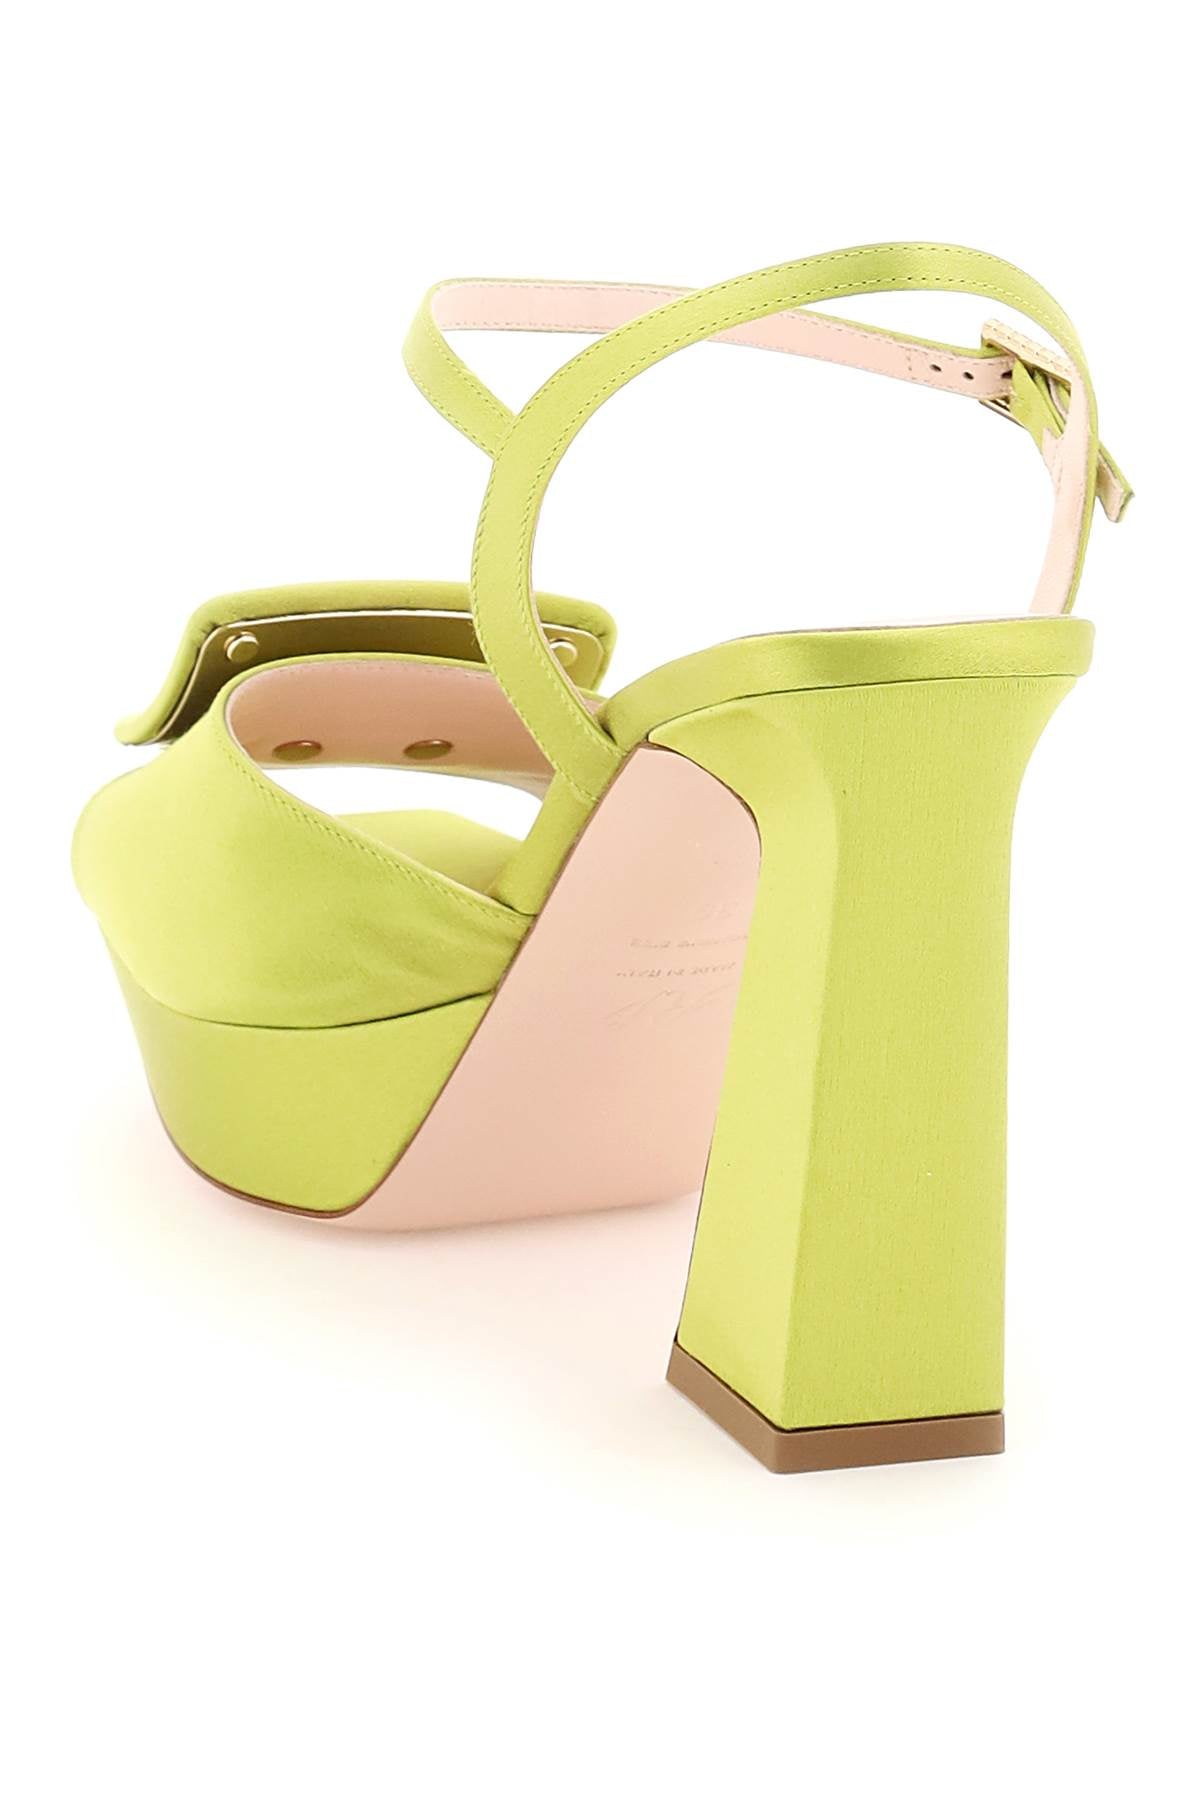 ROGER VIVIER Green Satin Sandals for Women - Square Toe, Rhinestone Buckle Ankle Strap